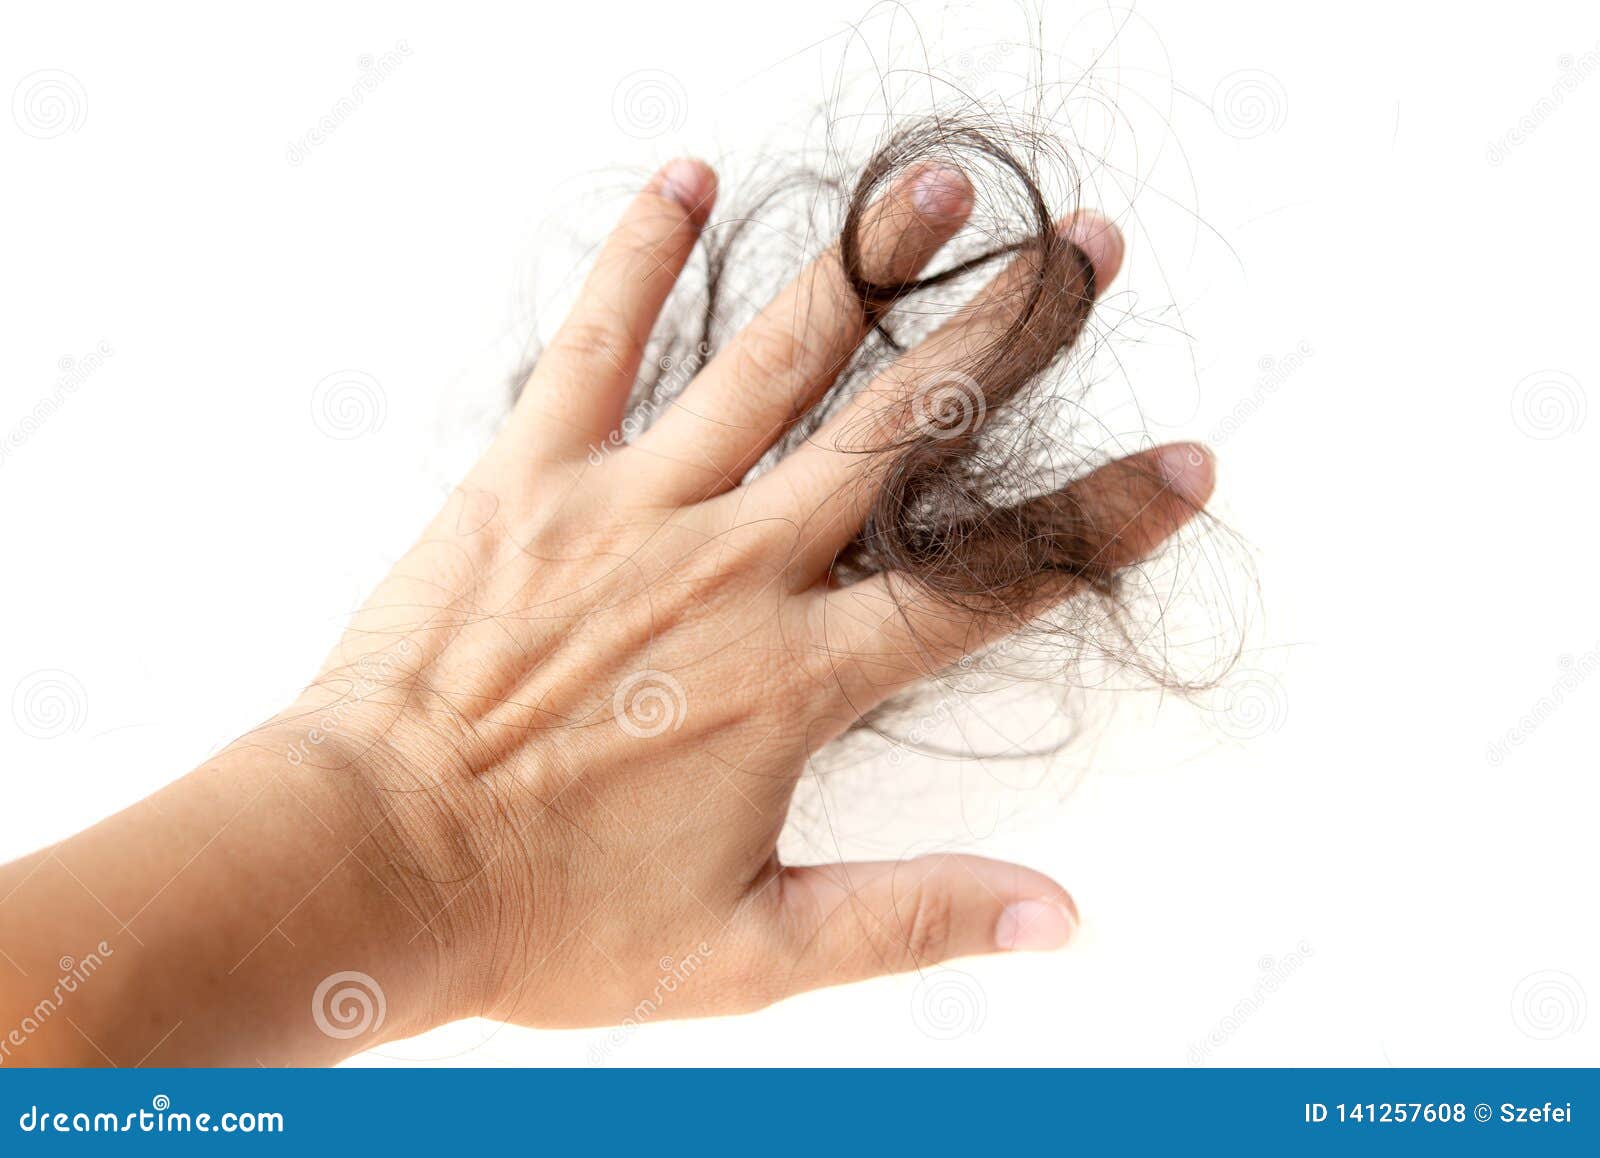 BERNARD "BUCK" LOMBARDI Lost-hair-isolated-human-hand-white-background-141257608